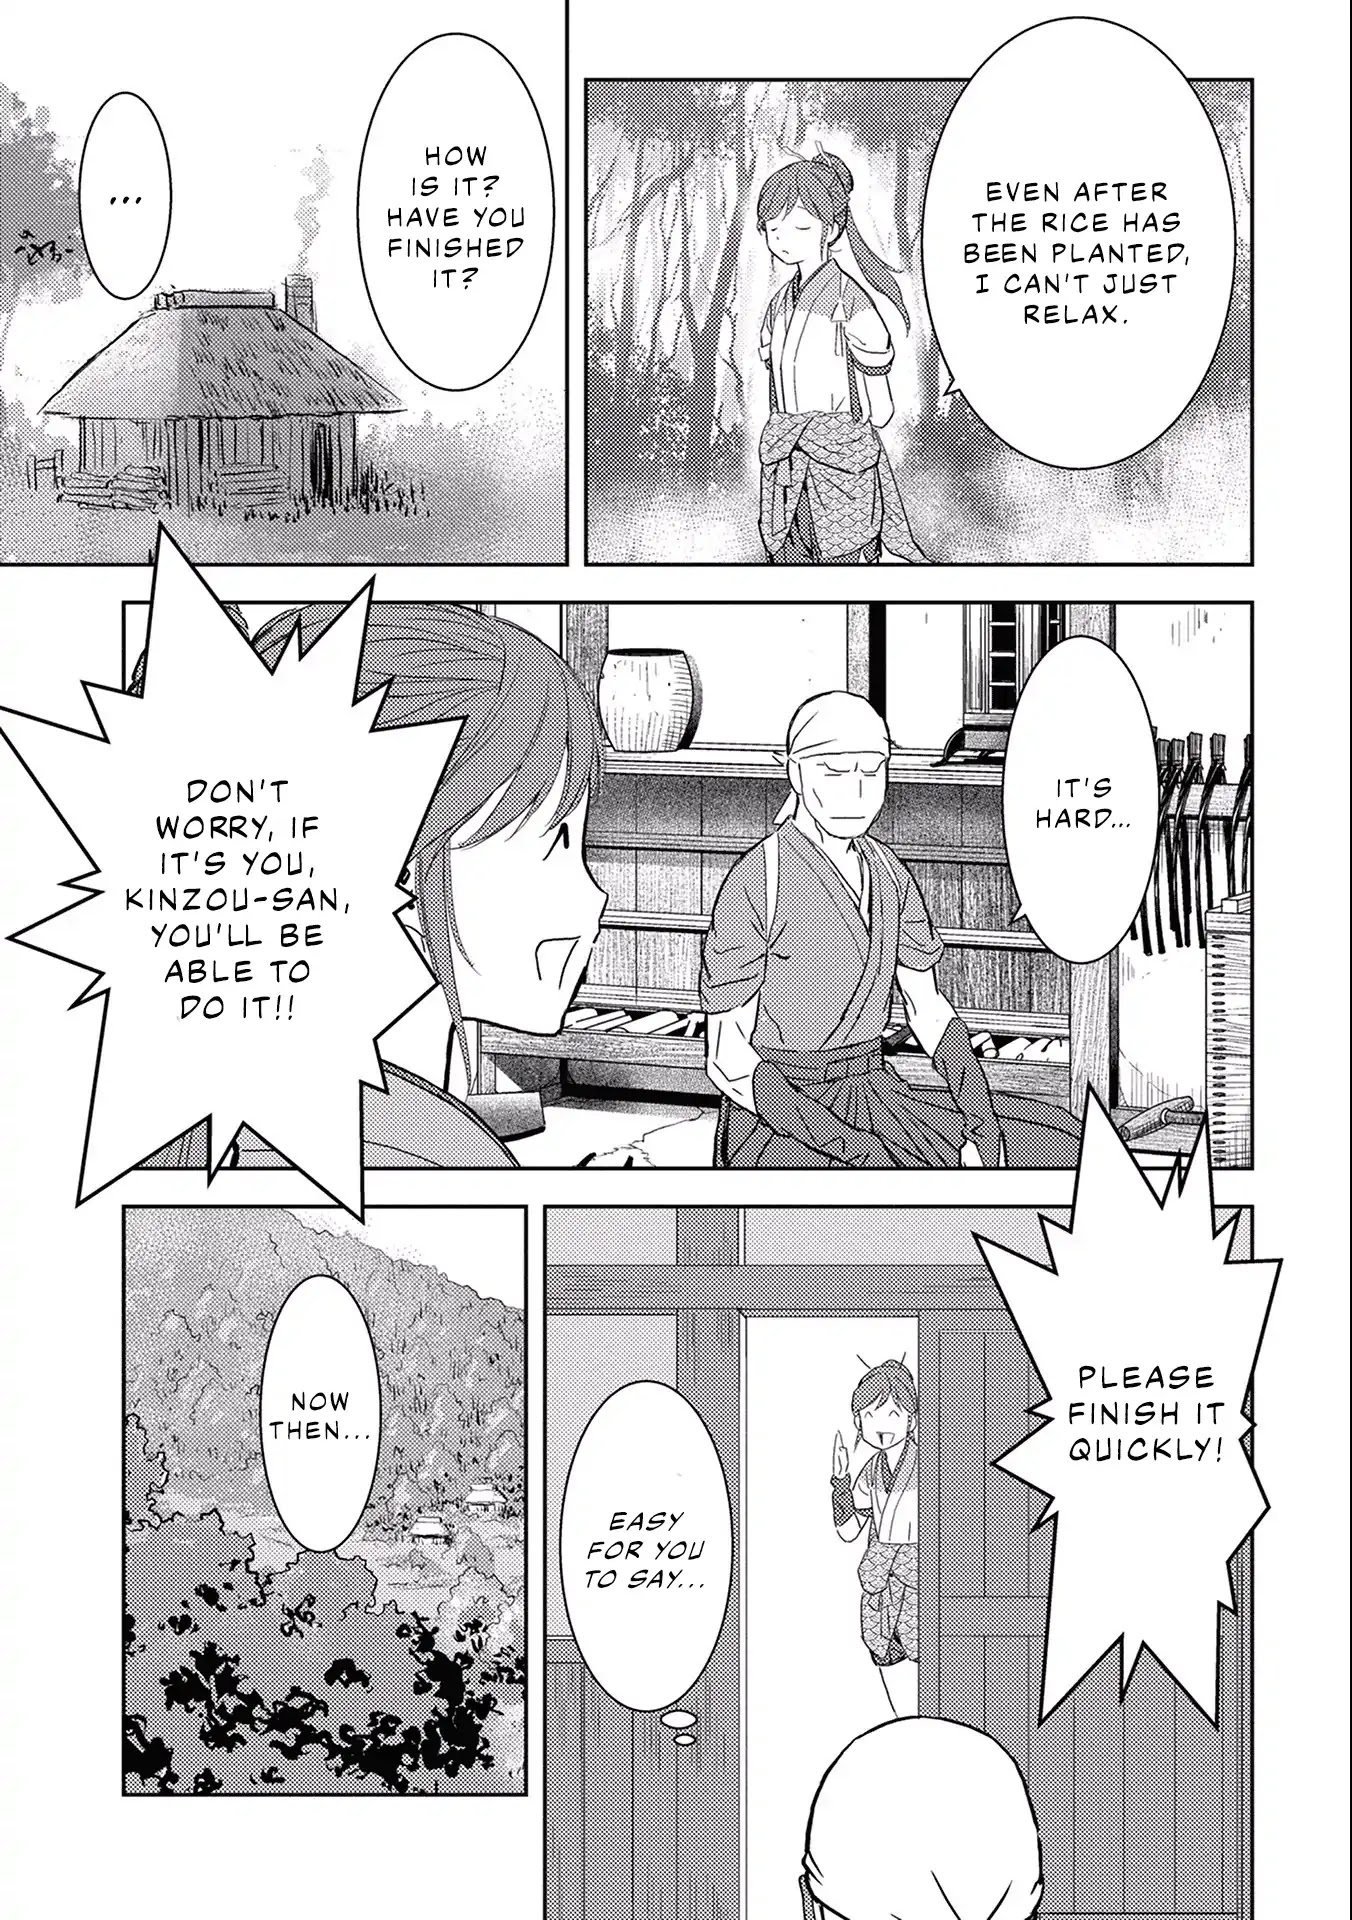 Sengoku Komachi Kurou Tan! Chapter 6: Rice Cultivation